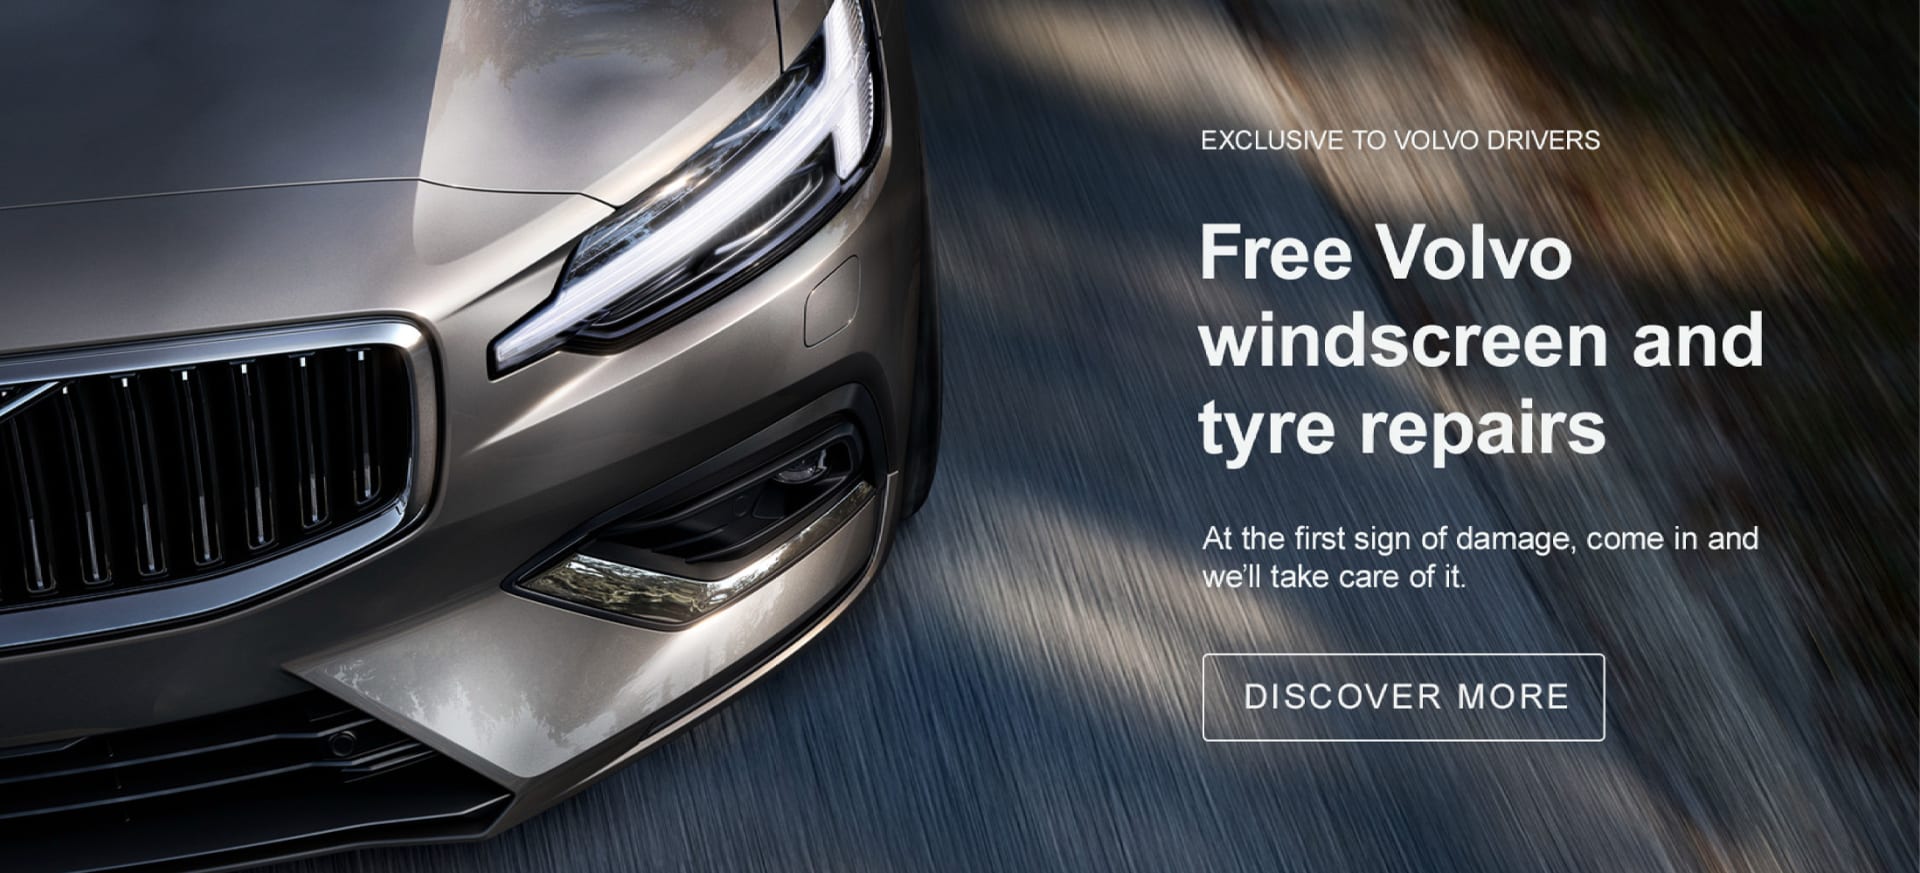 Volvo Free Windscreen and Tyre Repair